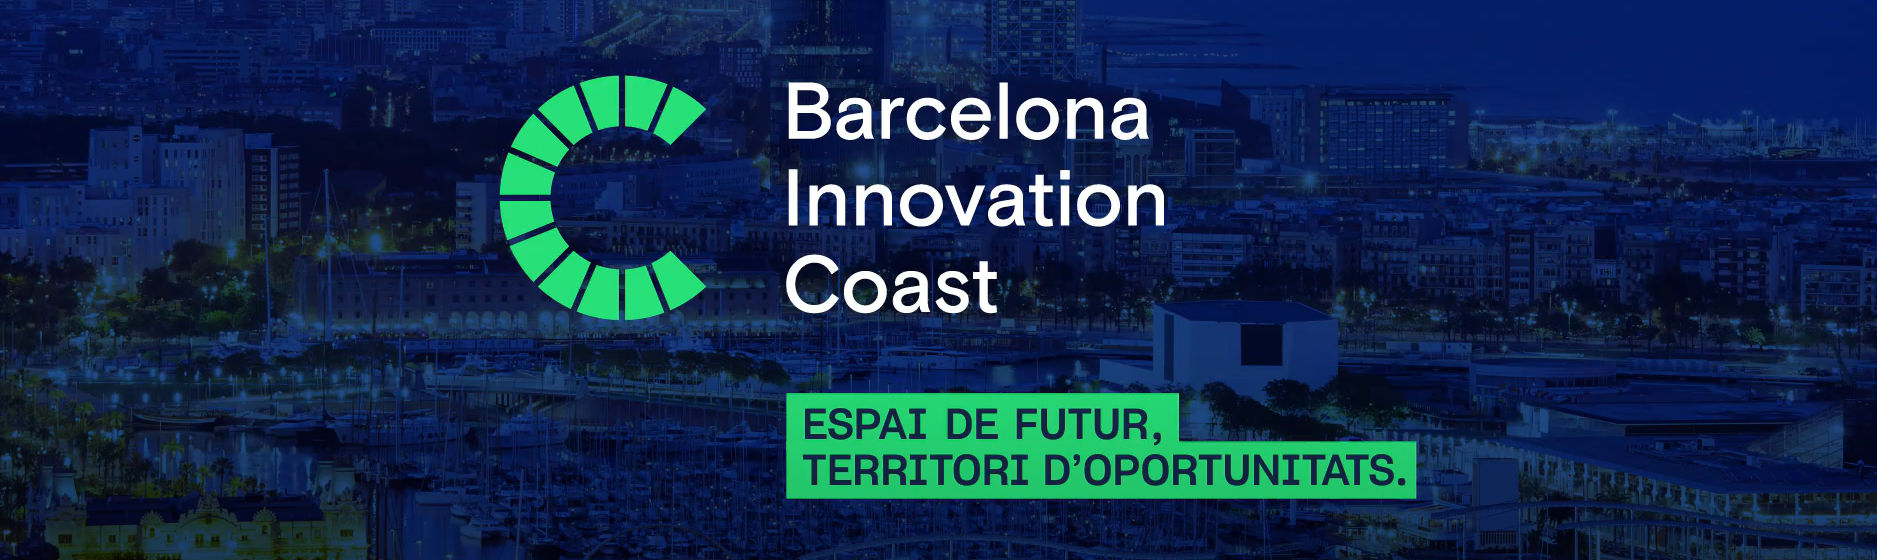 Barcelona innovation Coast